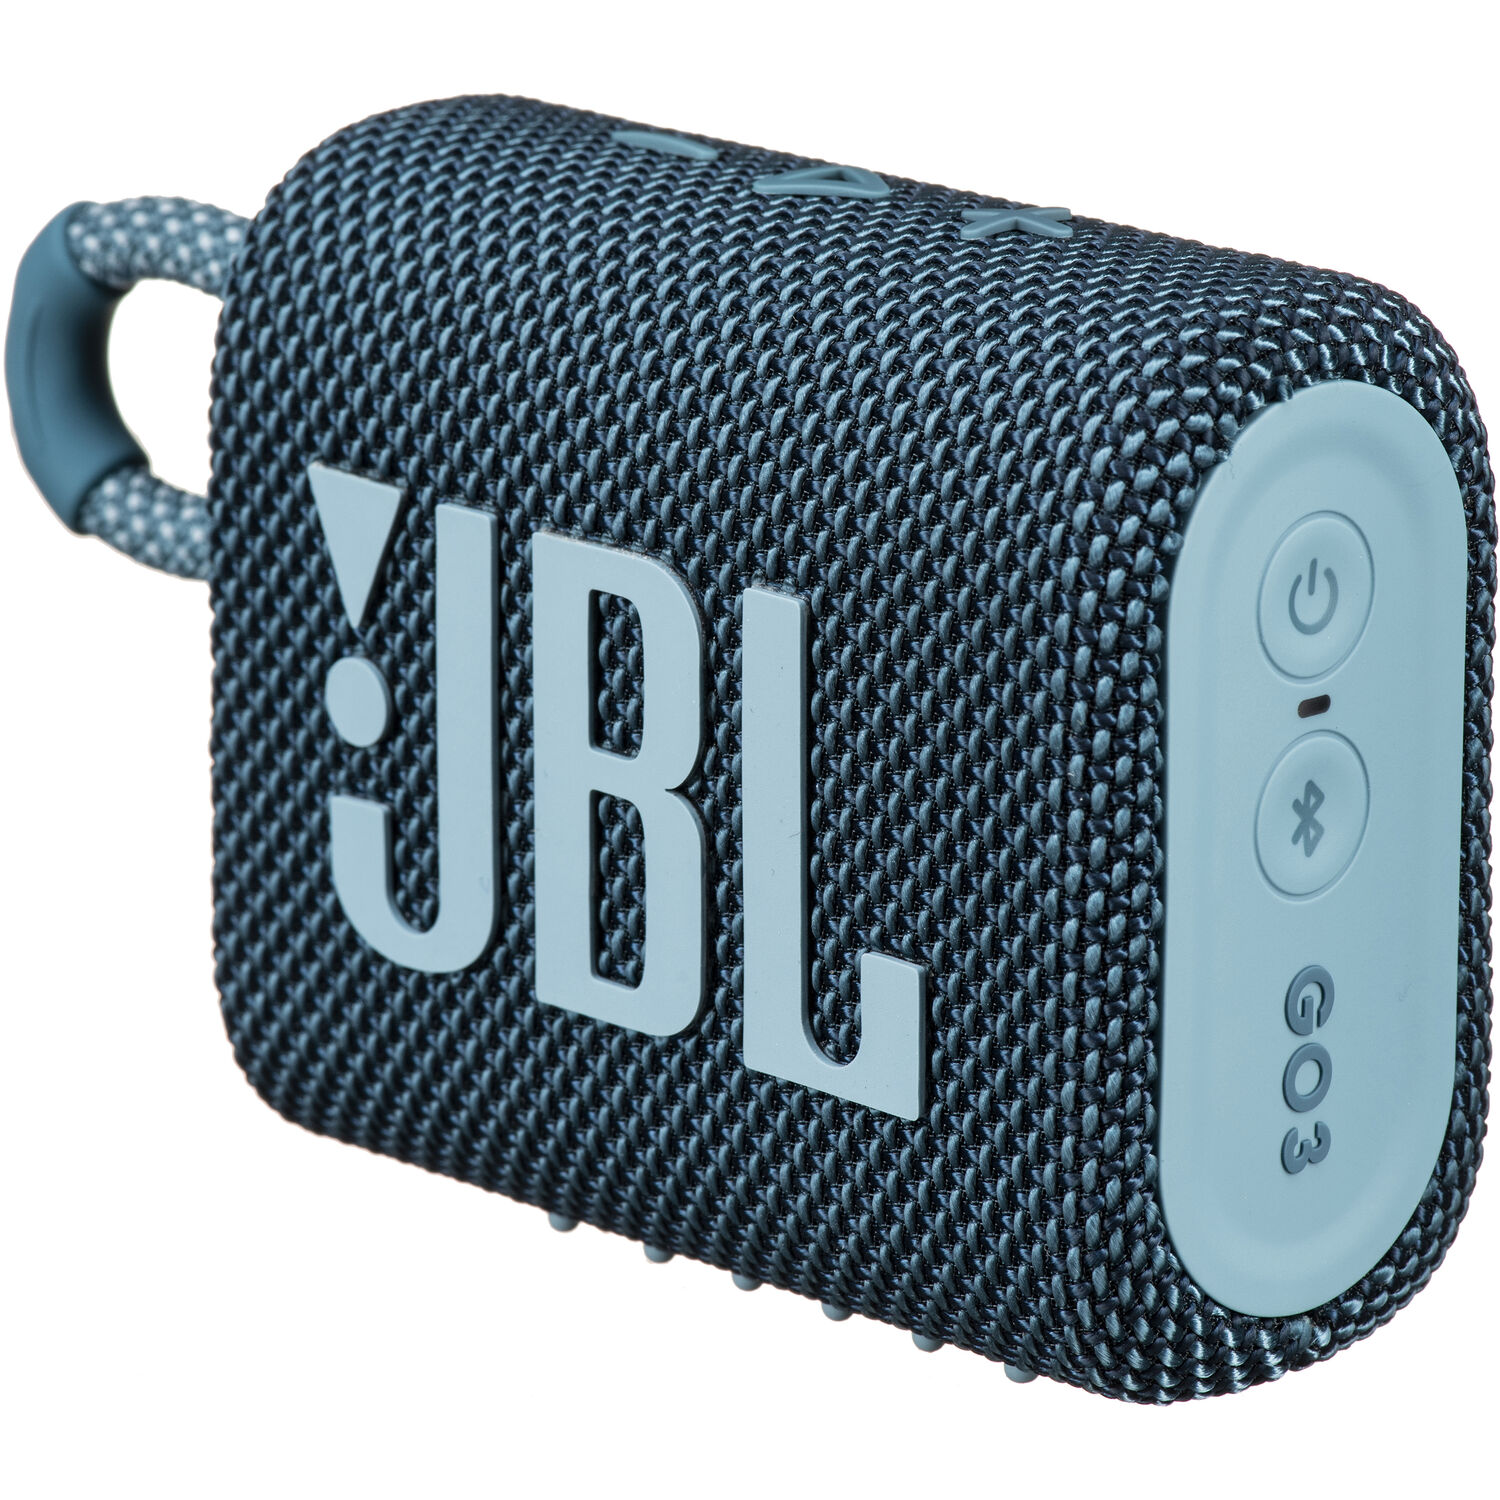 Altavoz Portátil Jbl Go 3 con Bluetooth Azul